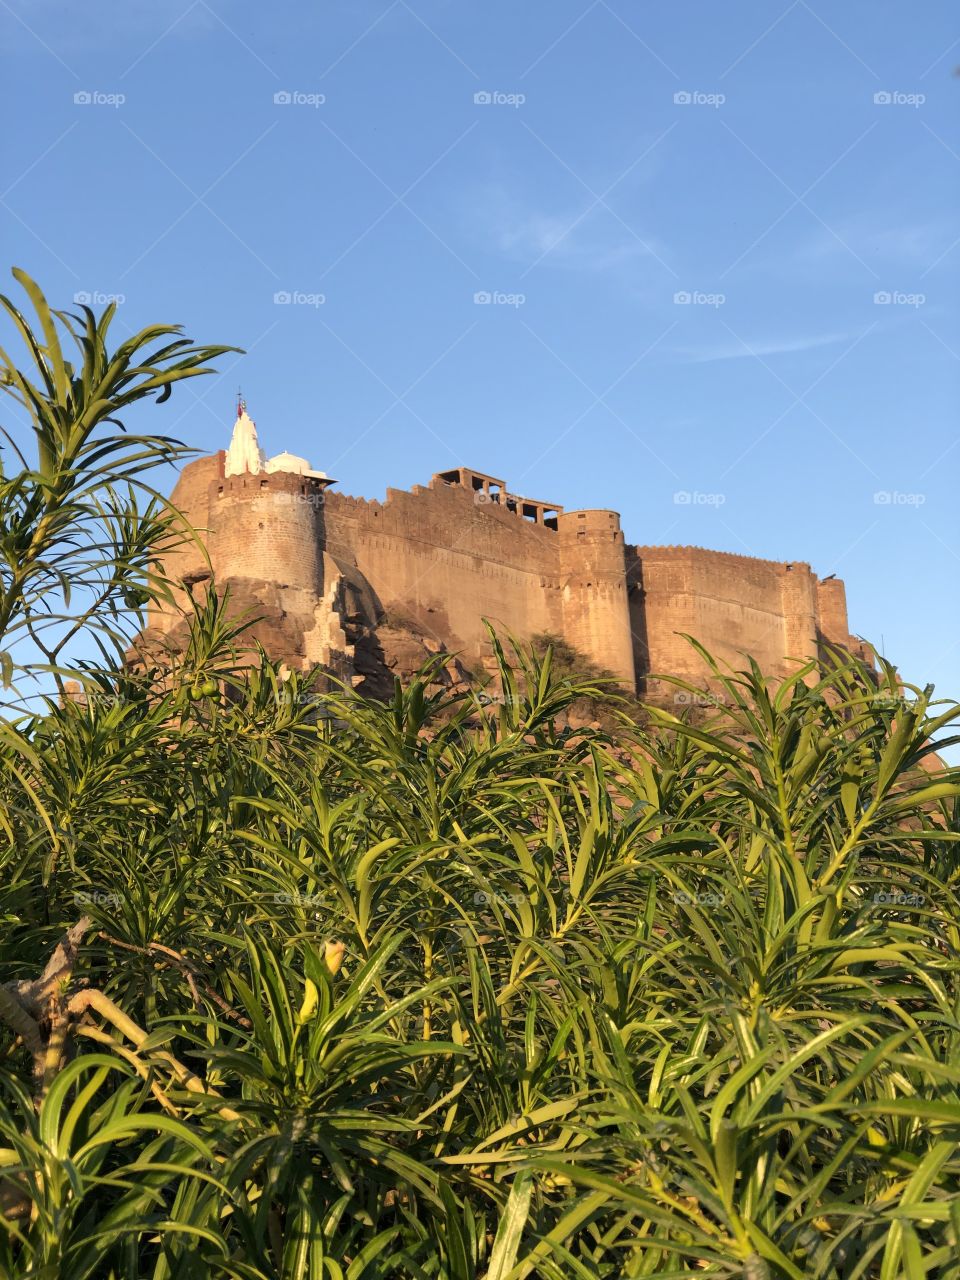 Natural beauty of Mehrangarh Fort